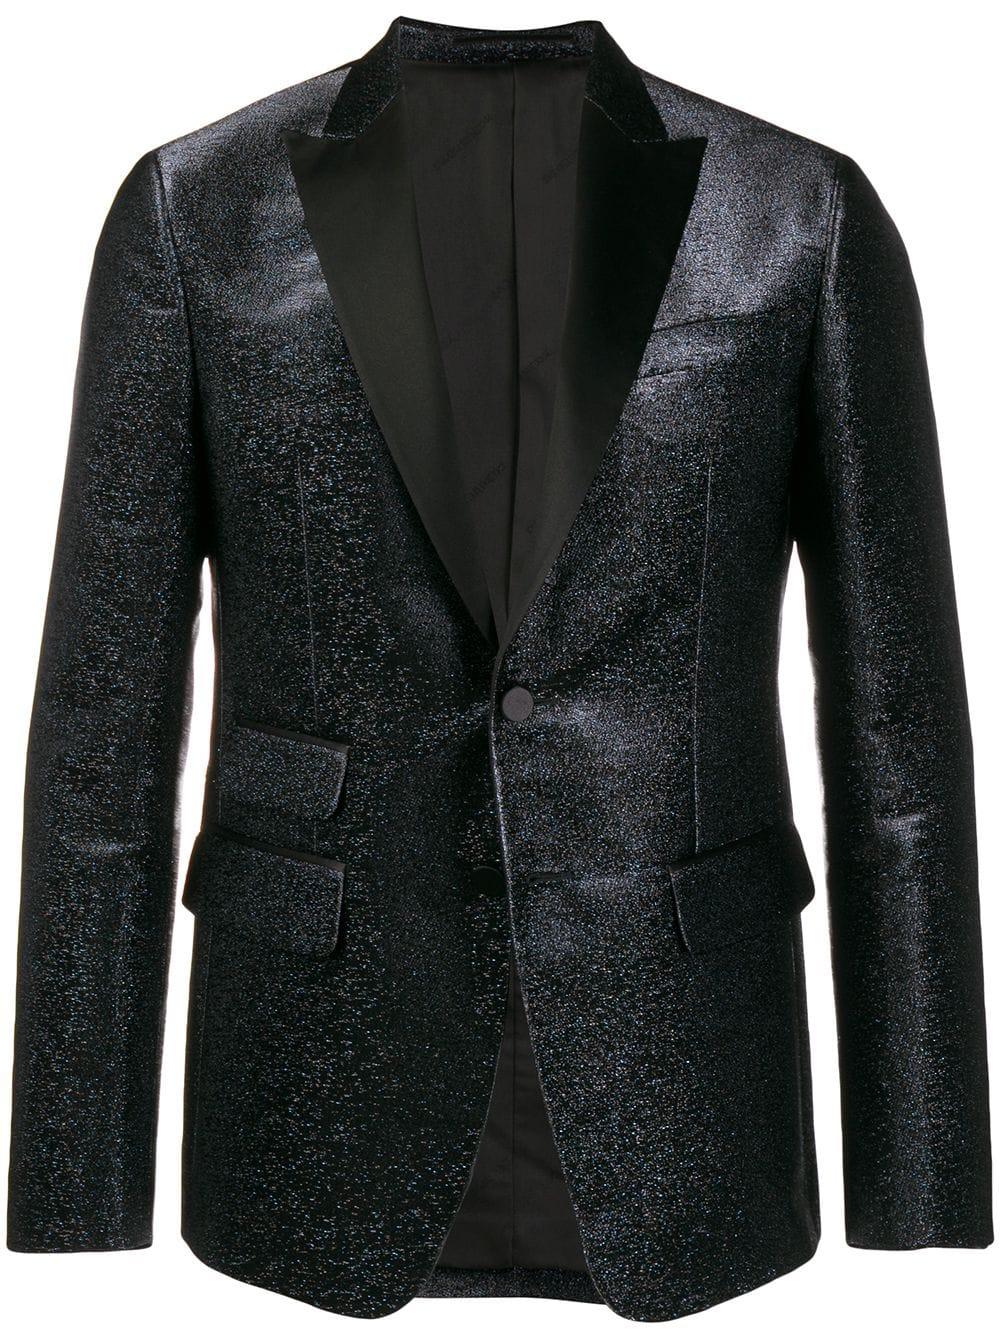 DSquared² Silk Glitter Tailored Blazer in Black for Men - Save 40% - Lyst